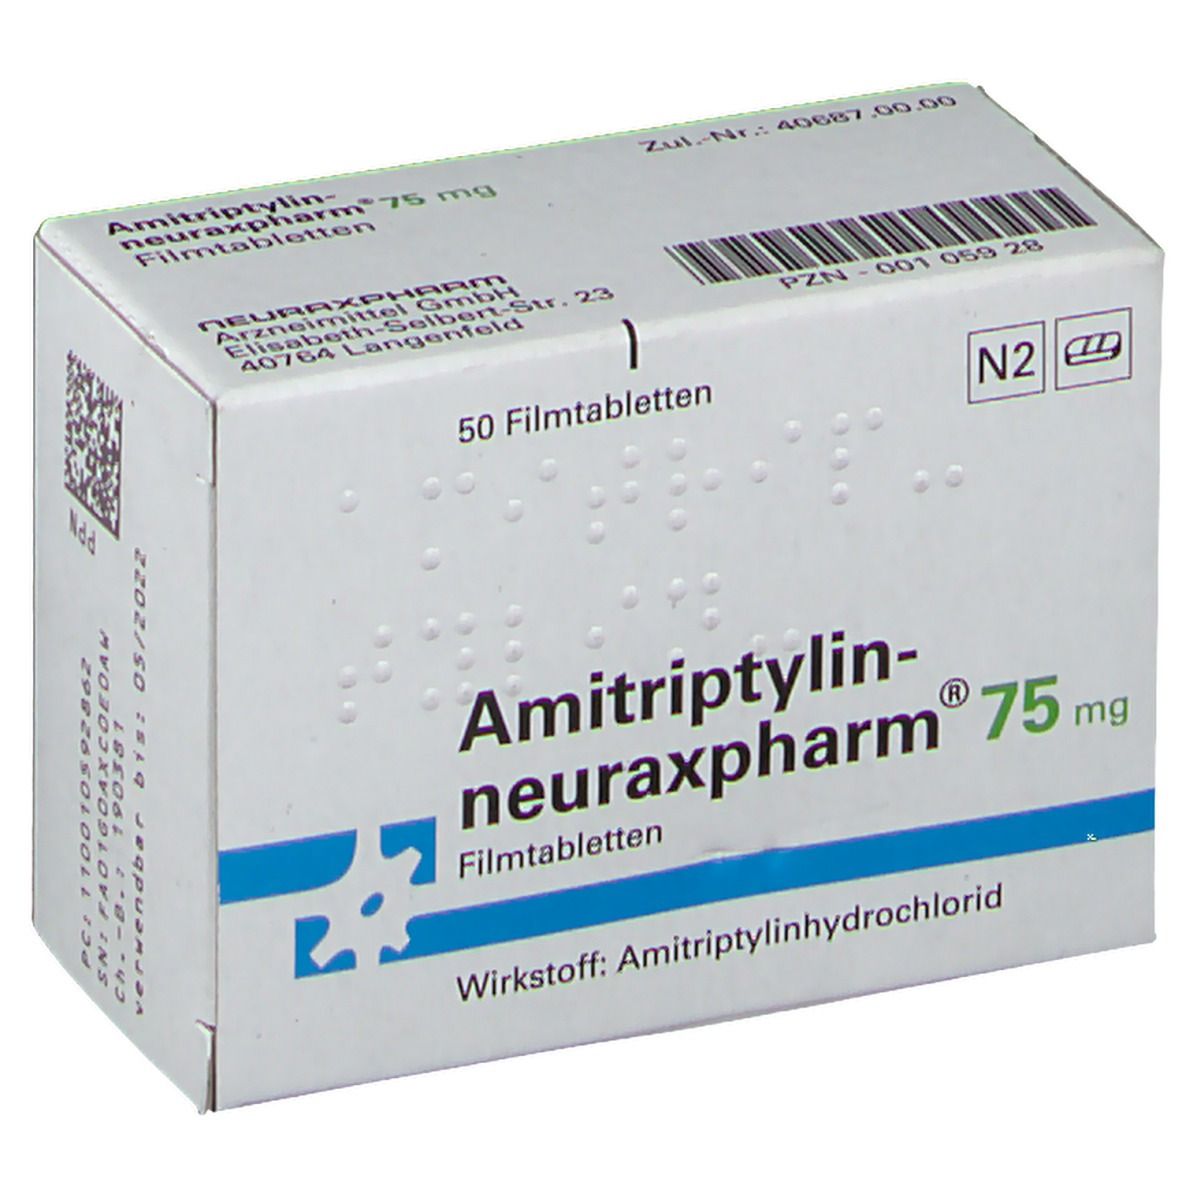 Amitriptylin-neuraxpharm® 75 mg